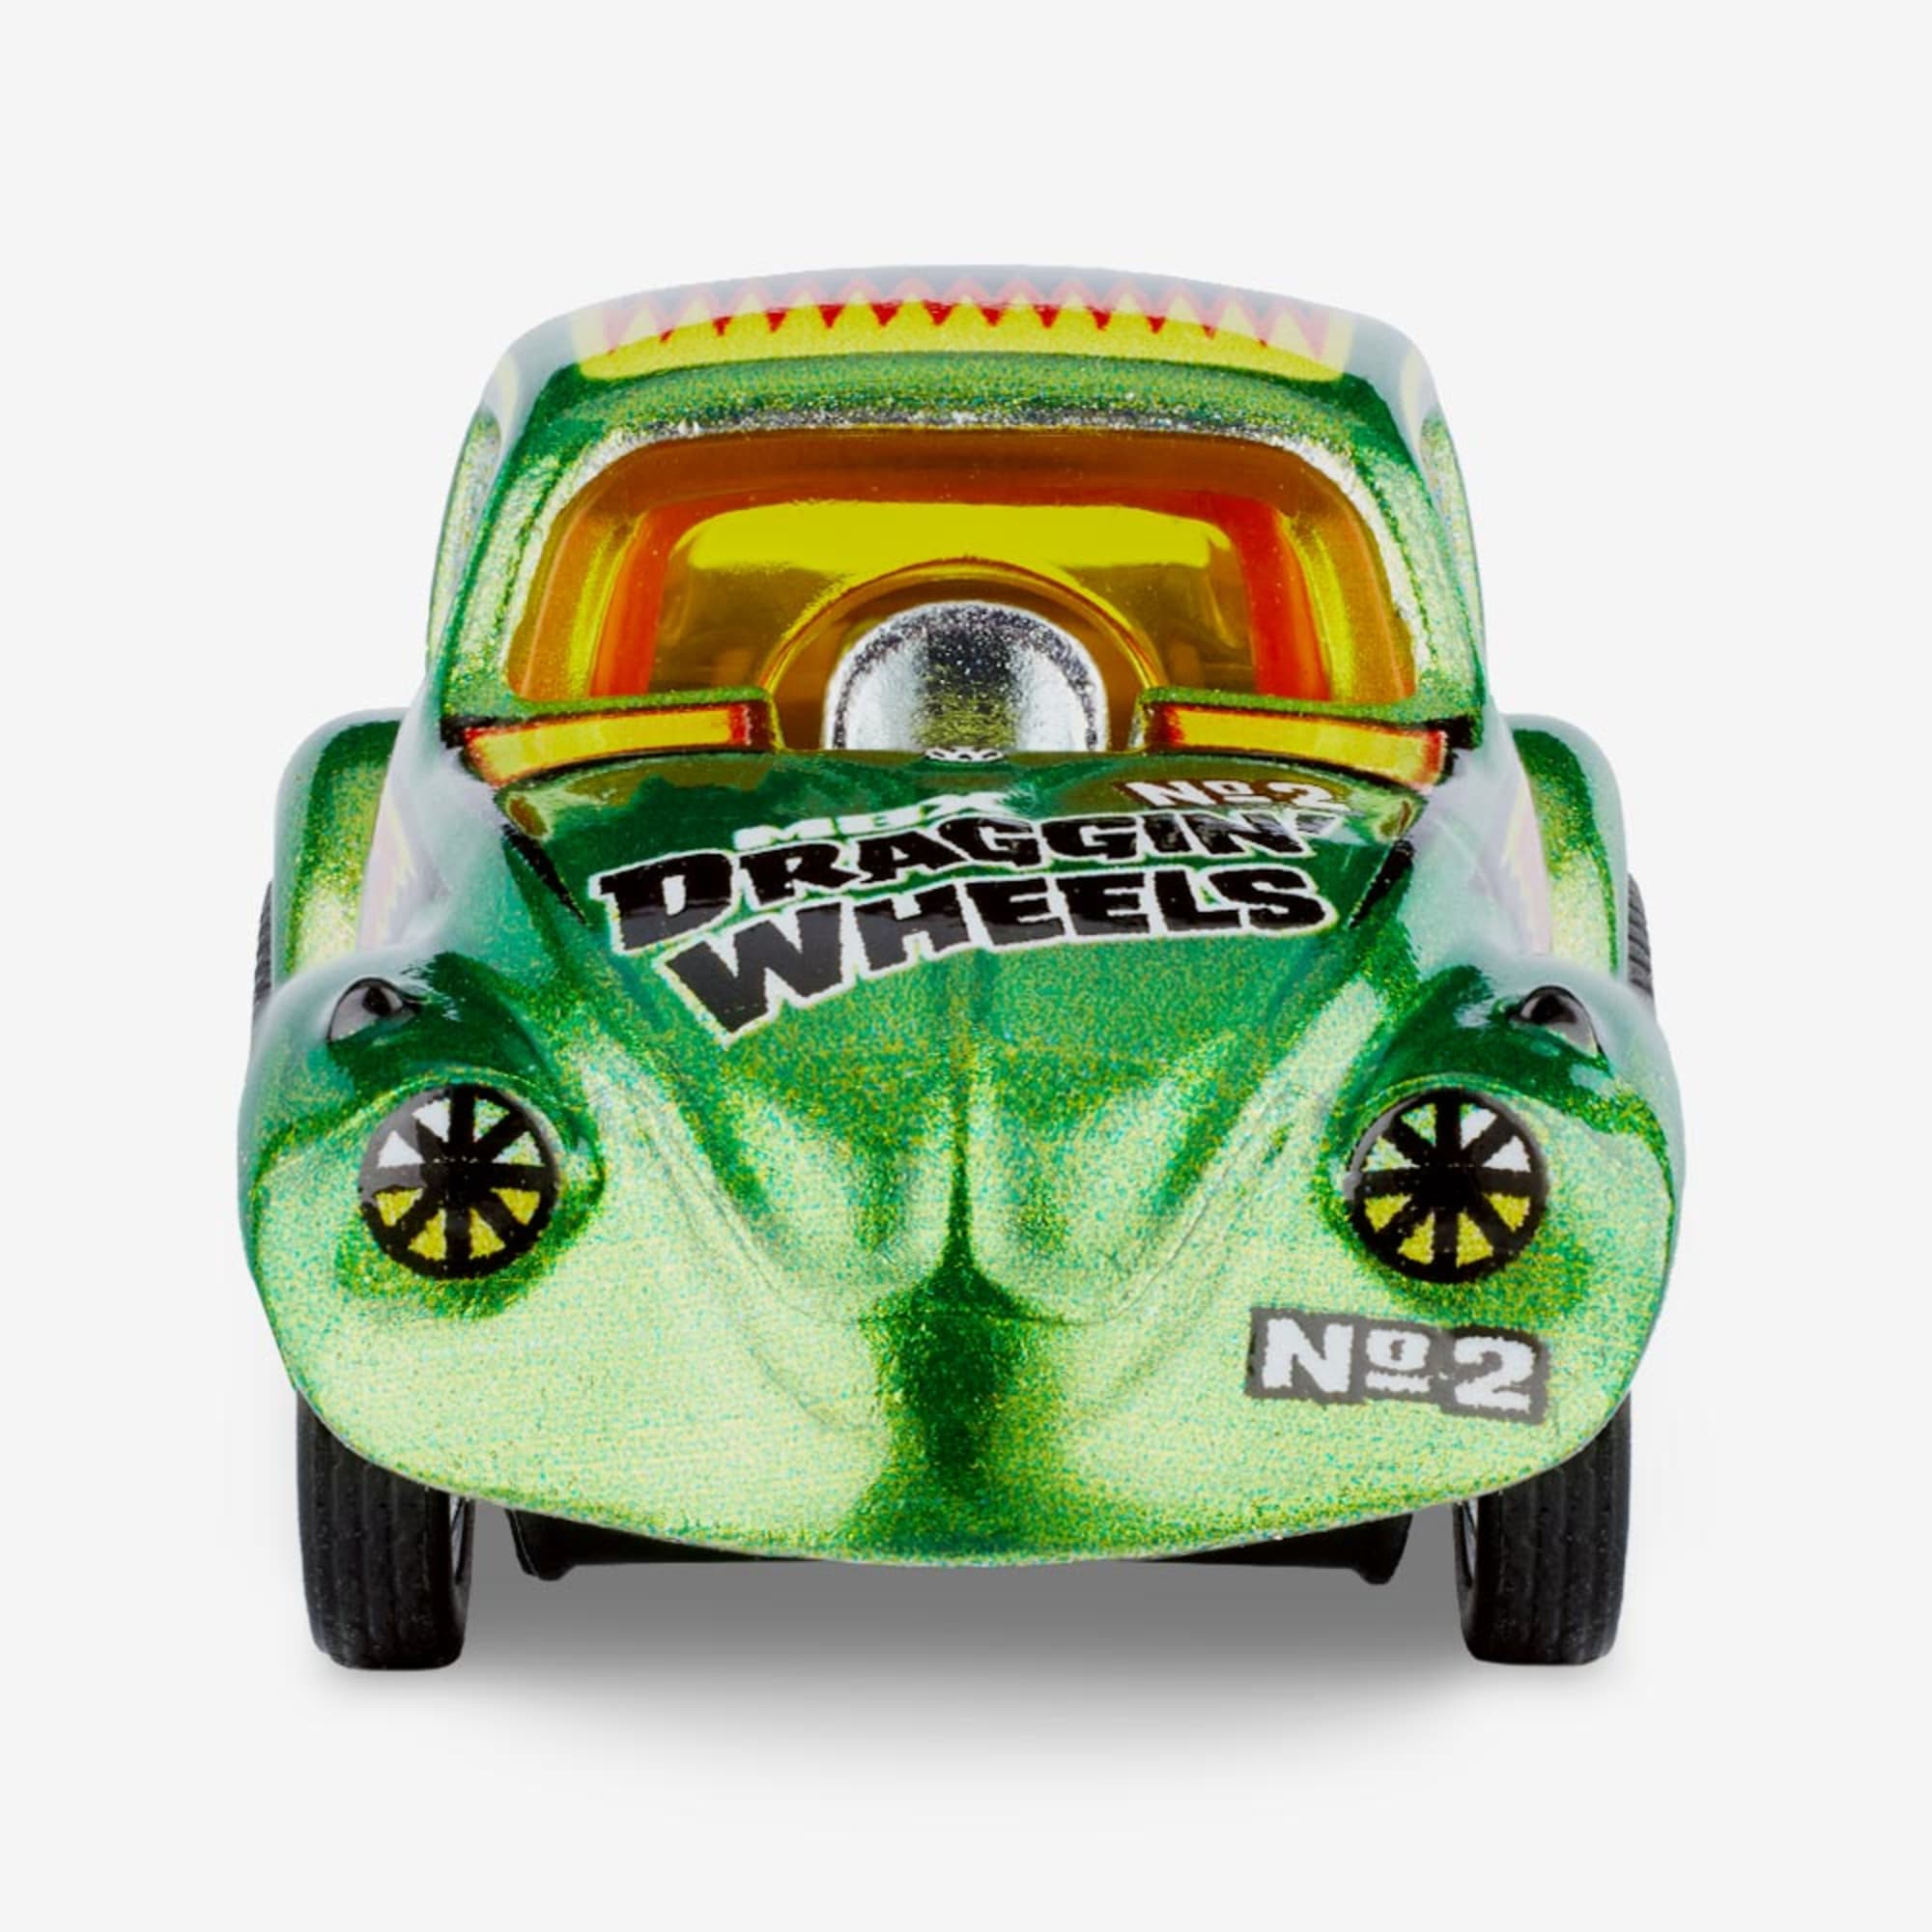 Matchbox ‘72 Volkswagen Beetle Dragster